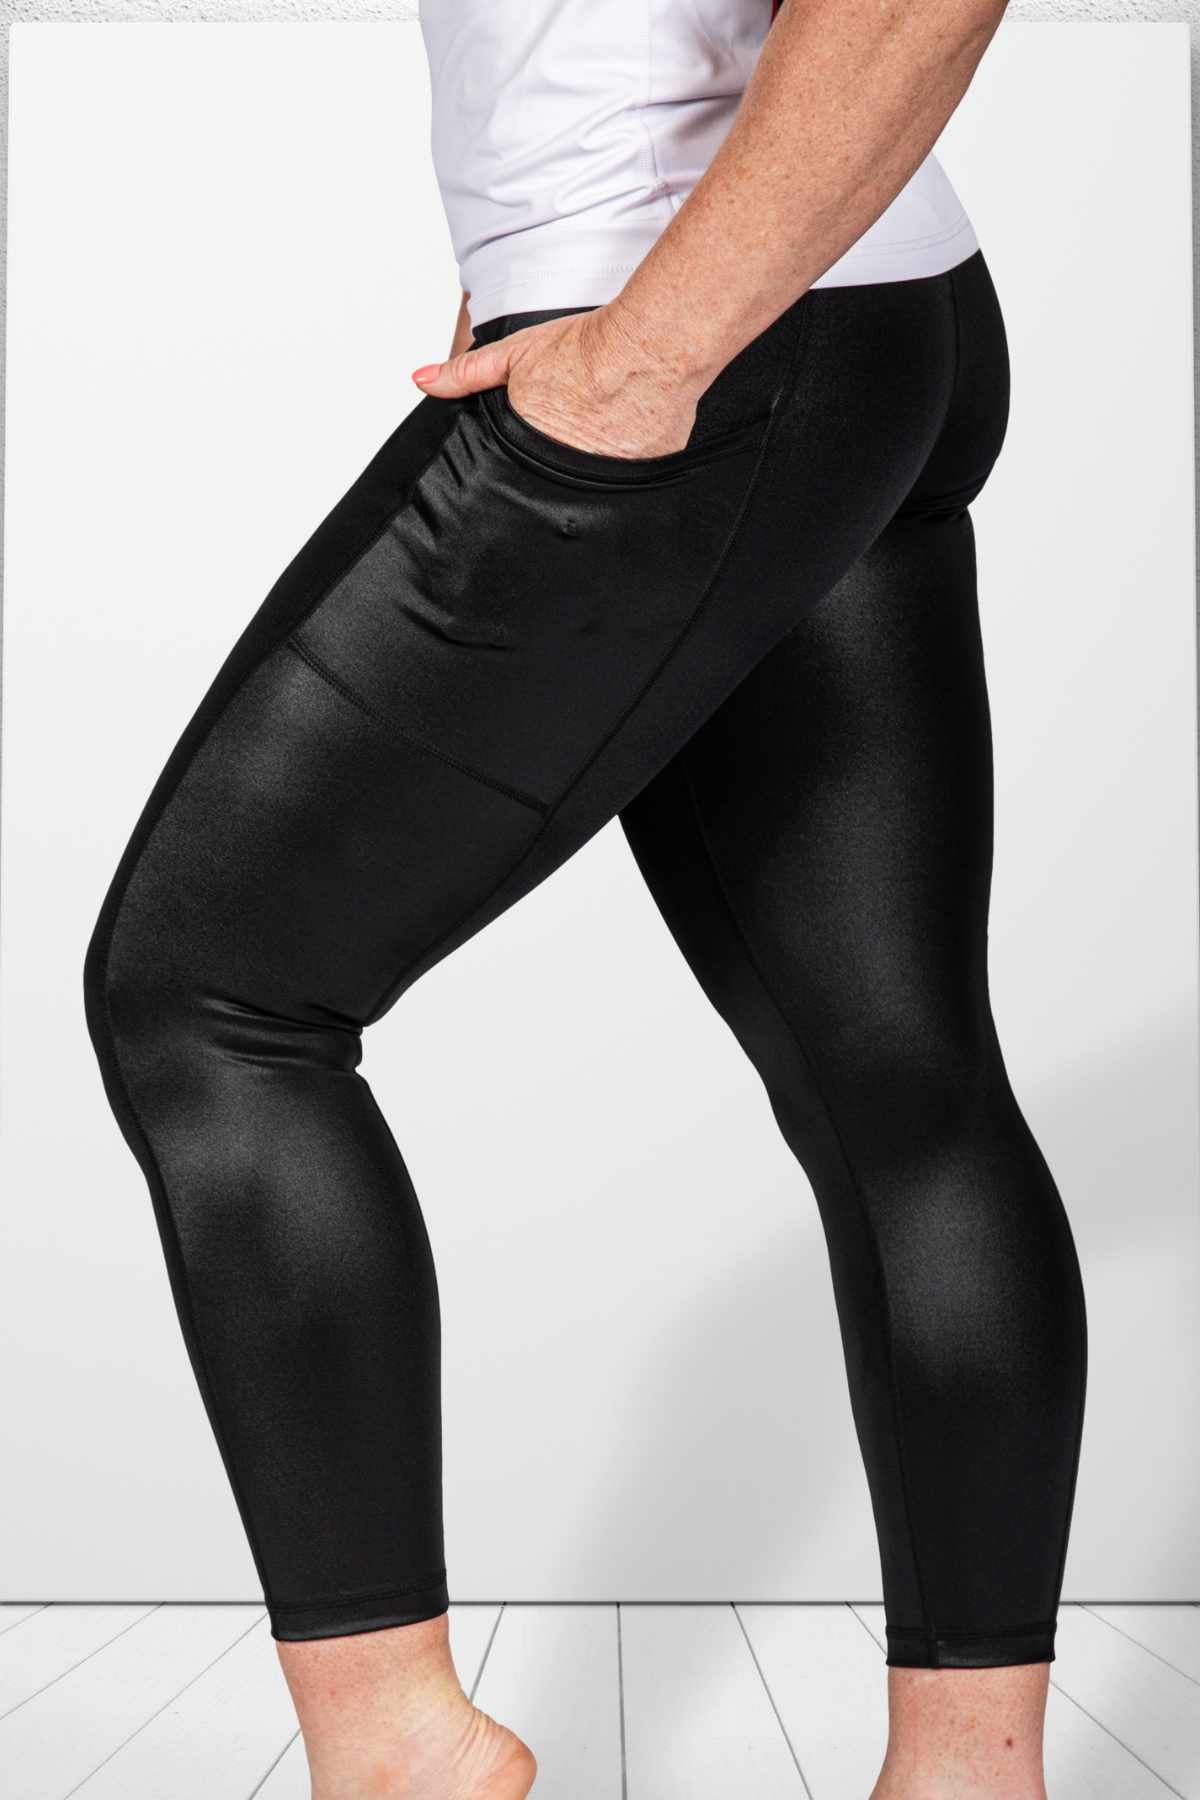 Power 7/8 Workout Leggings - Ultra Black Camo Print, Women's Leggings